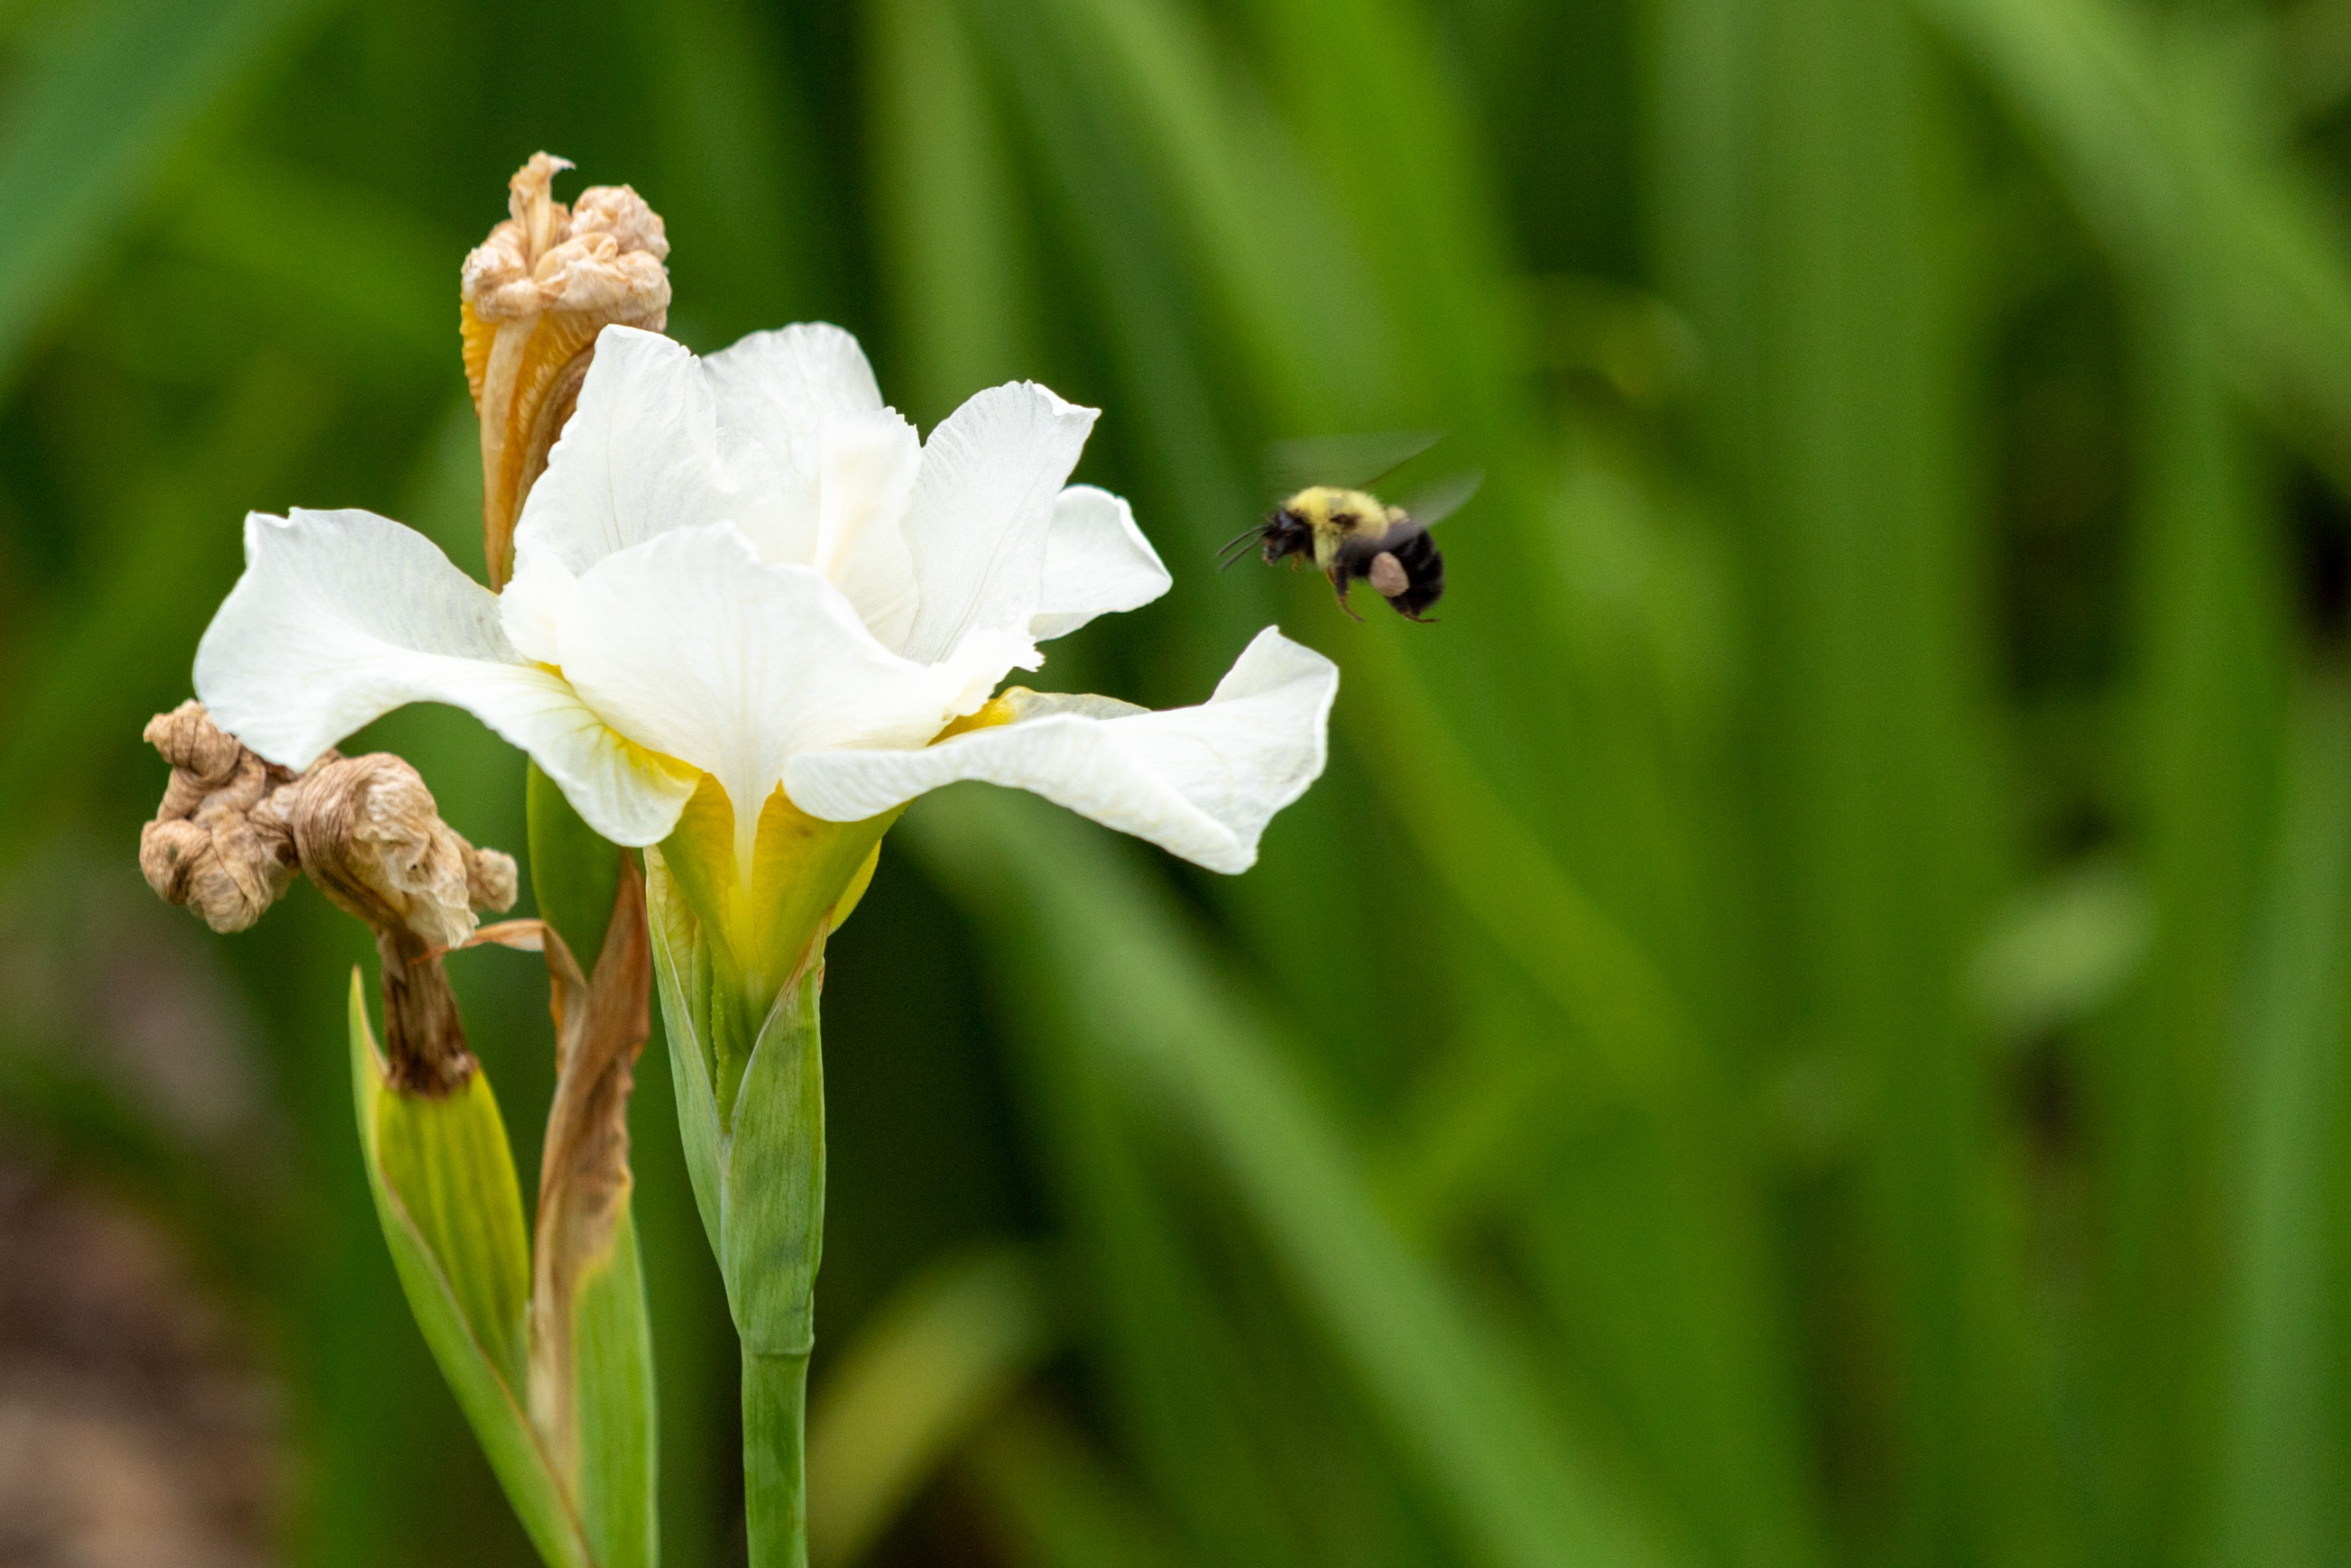 Bumble bee flying towards a white iris